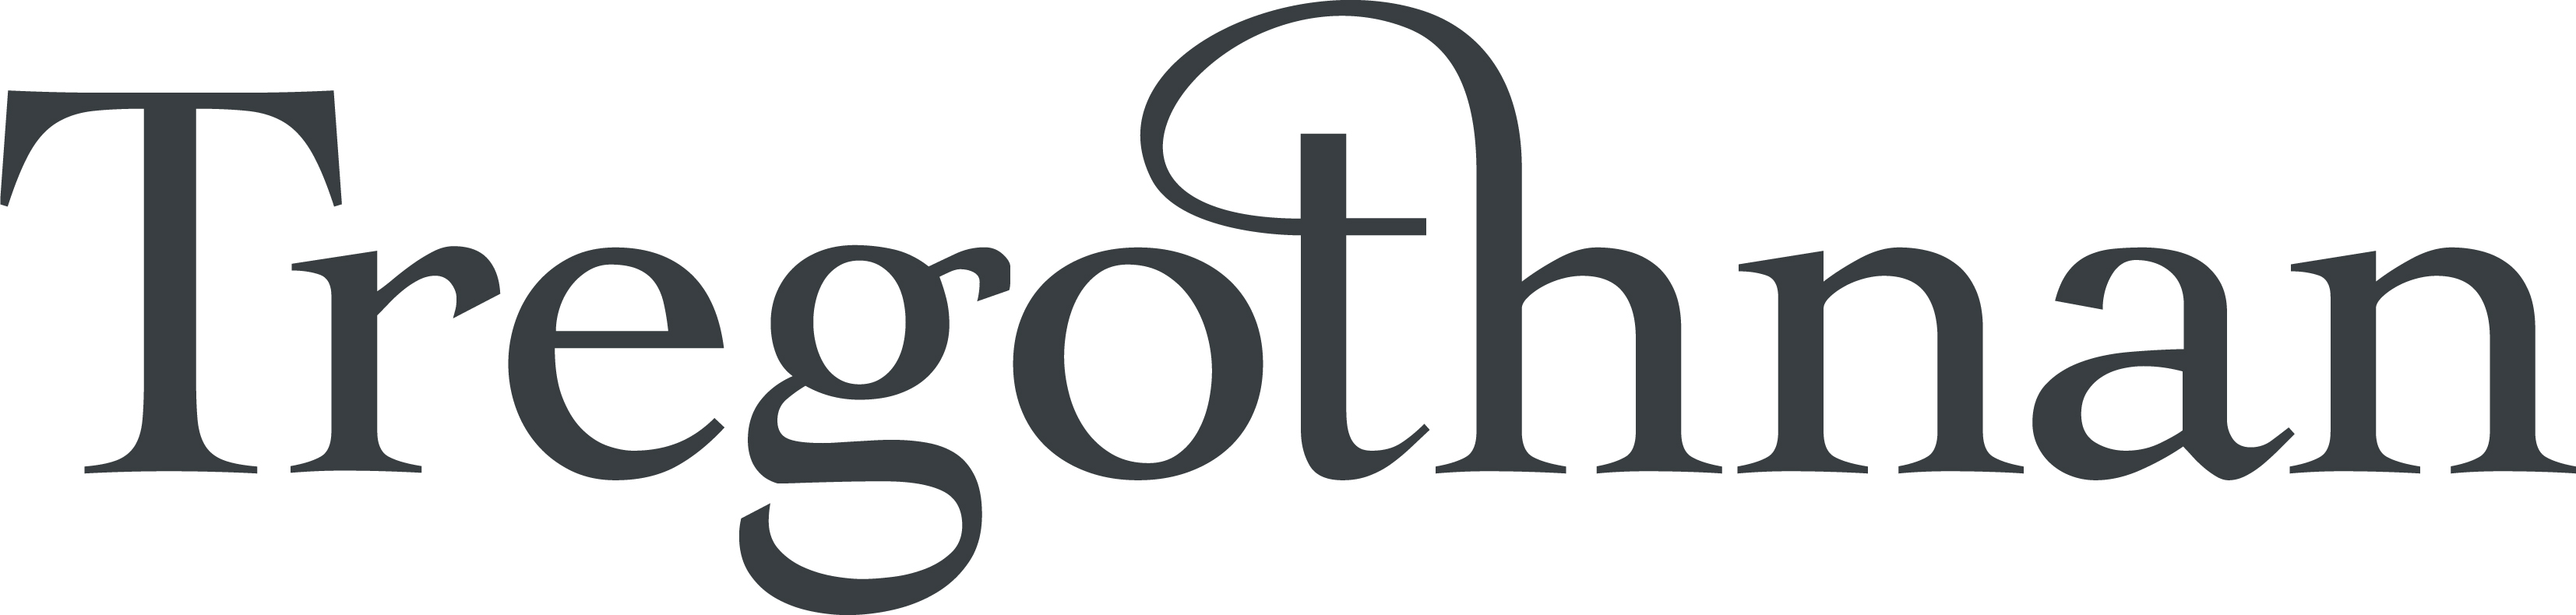 Tregothnan Estate logo in grey text